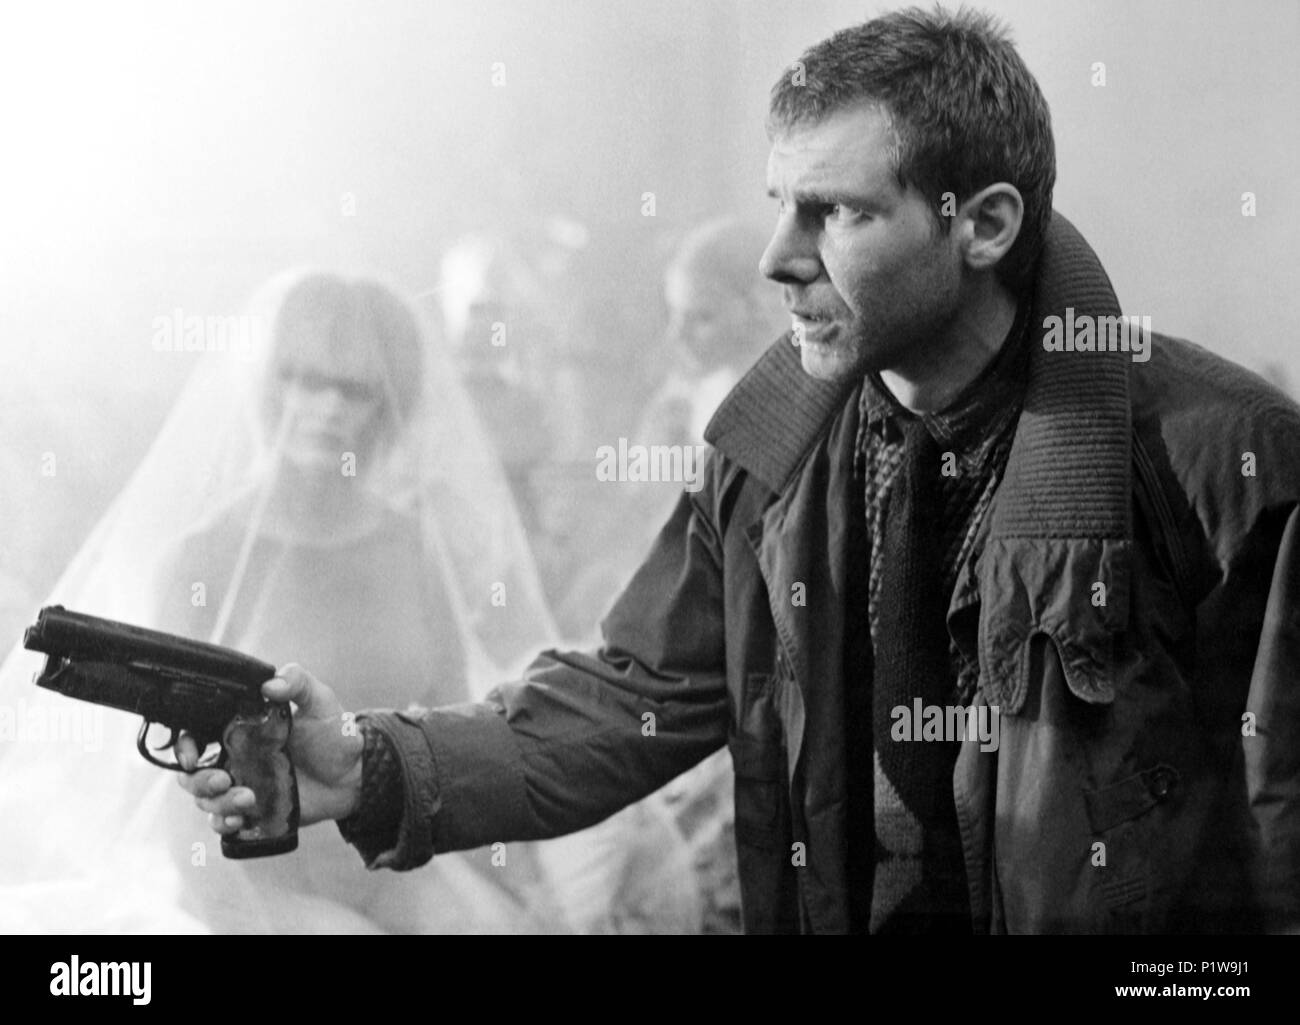 Titre original : Blade Runner. Titre en anglais : Blade Runner. Film Réalisateur : Ridley Scott. Année : 1982. Stars : HARRISON FORD. Credit : Ladd Company/WARNER BROS / Album Banque D'Images